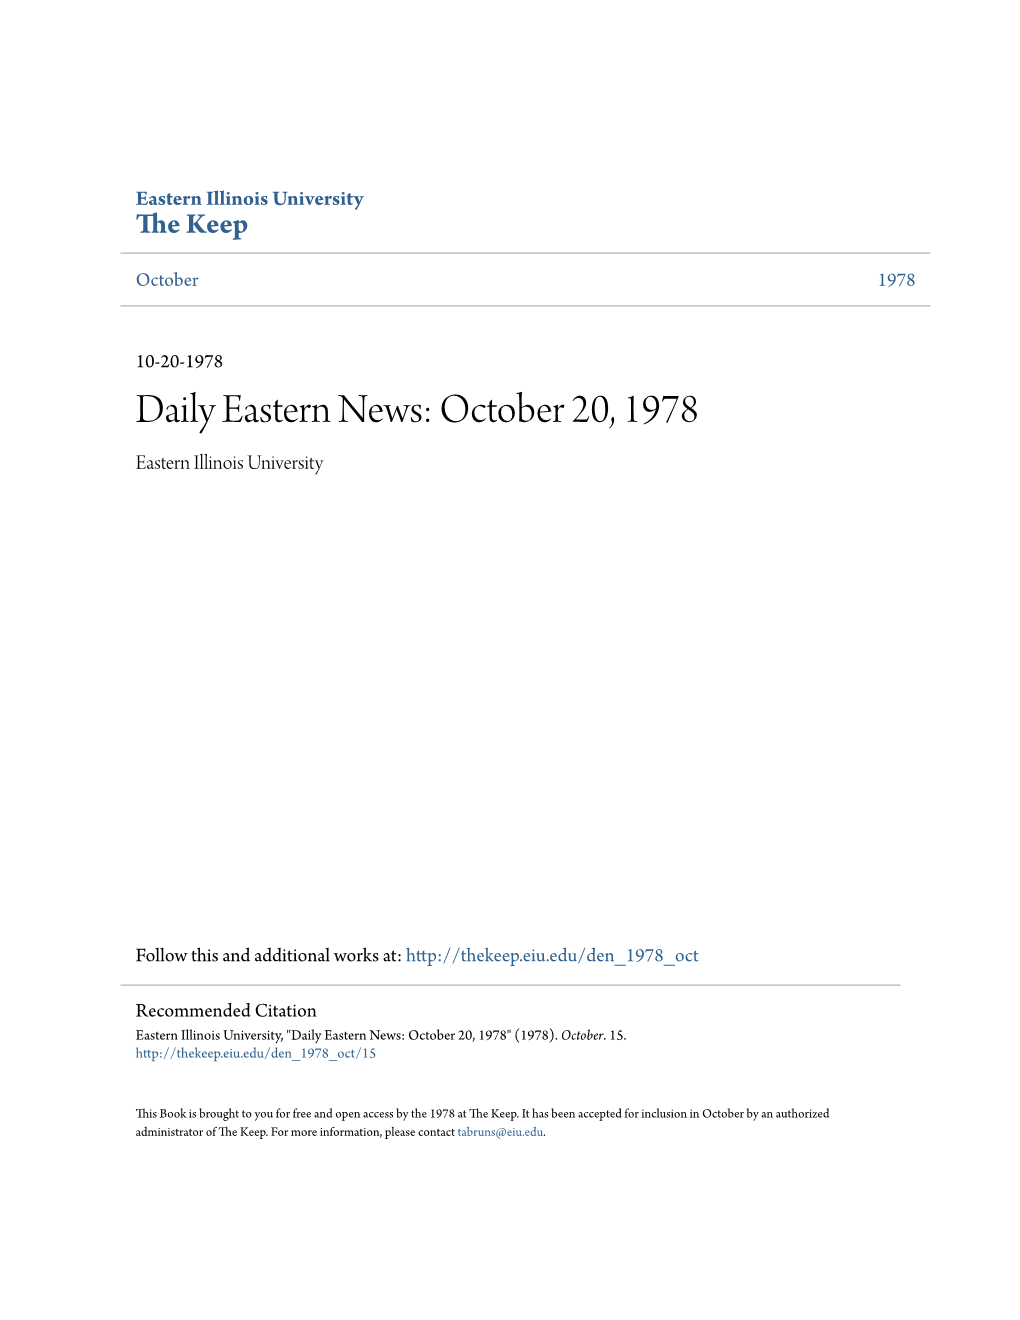 Eastern News: October 20, 1978 Eastern Illinois University